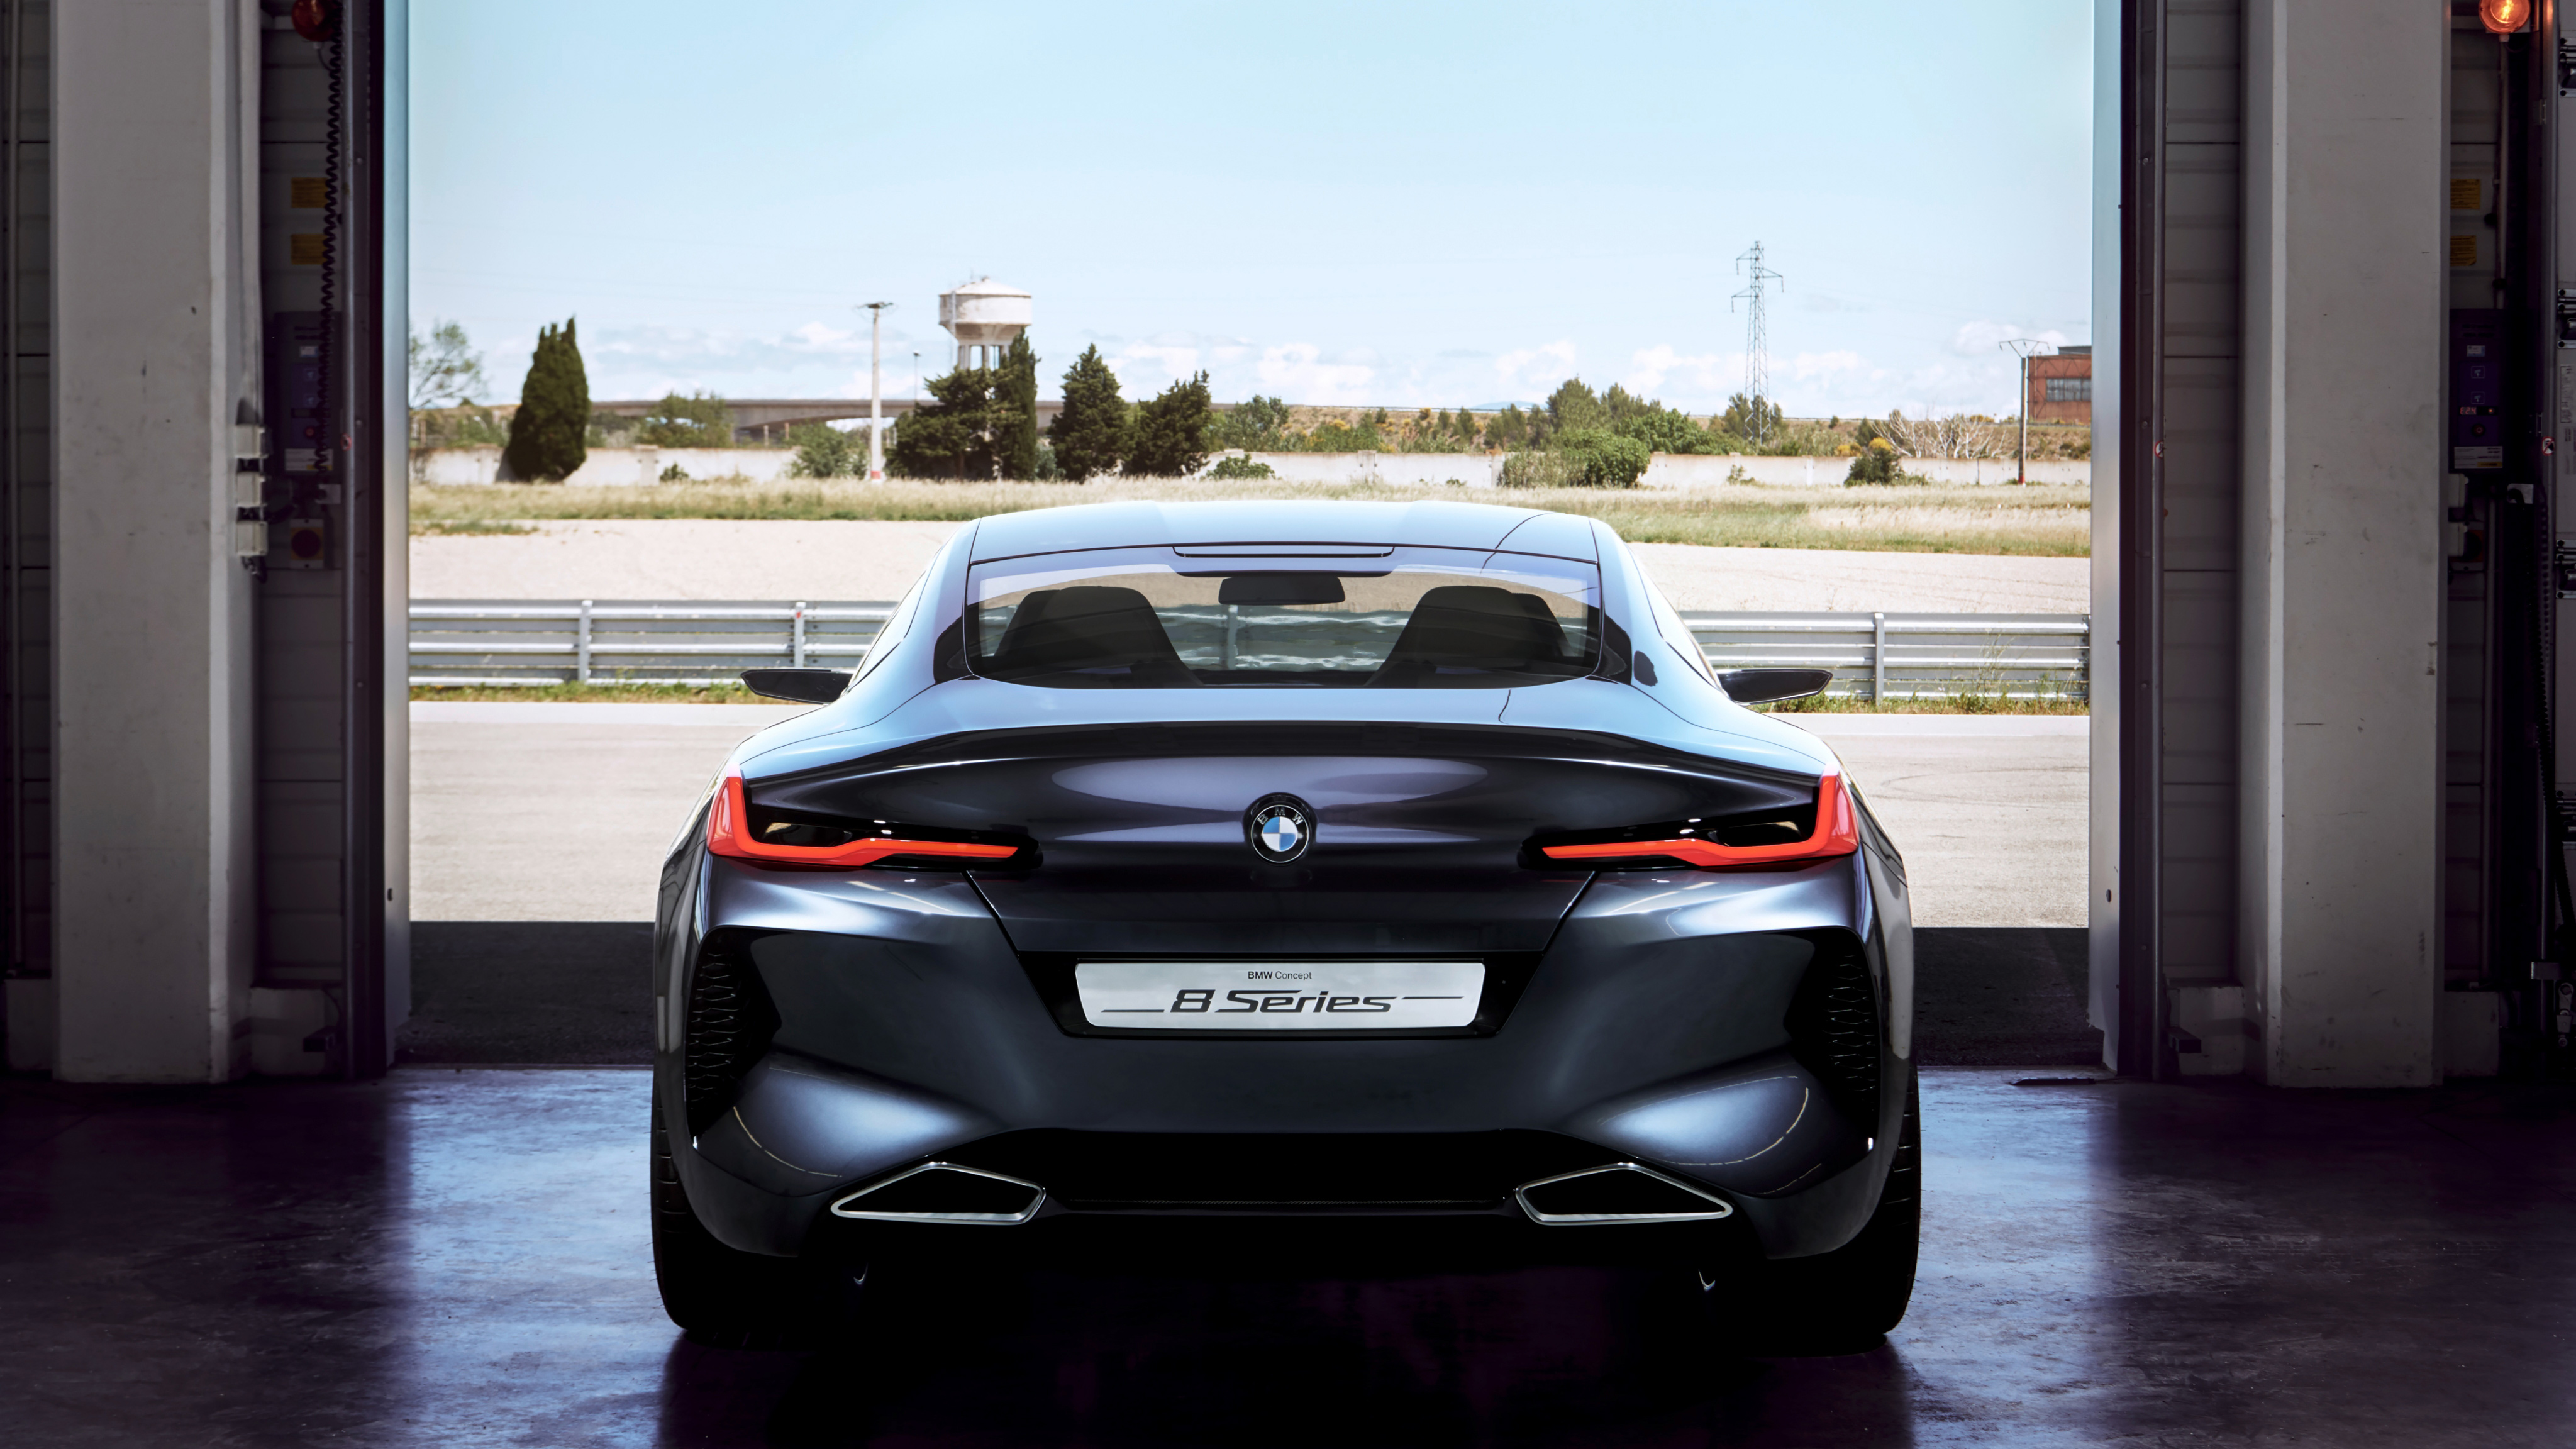 Du möchtest dir einen gebrauchten bmw m8 kaufen? BMW Concept 8 Series 4 Wallpaper | HD Car Wallpapers | ID